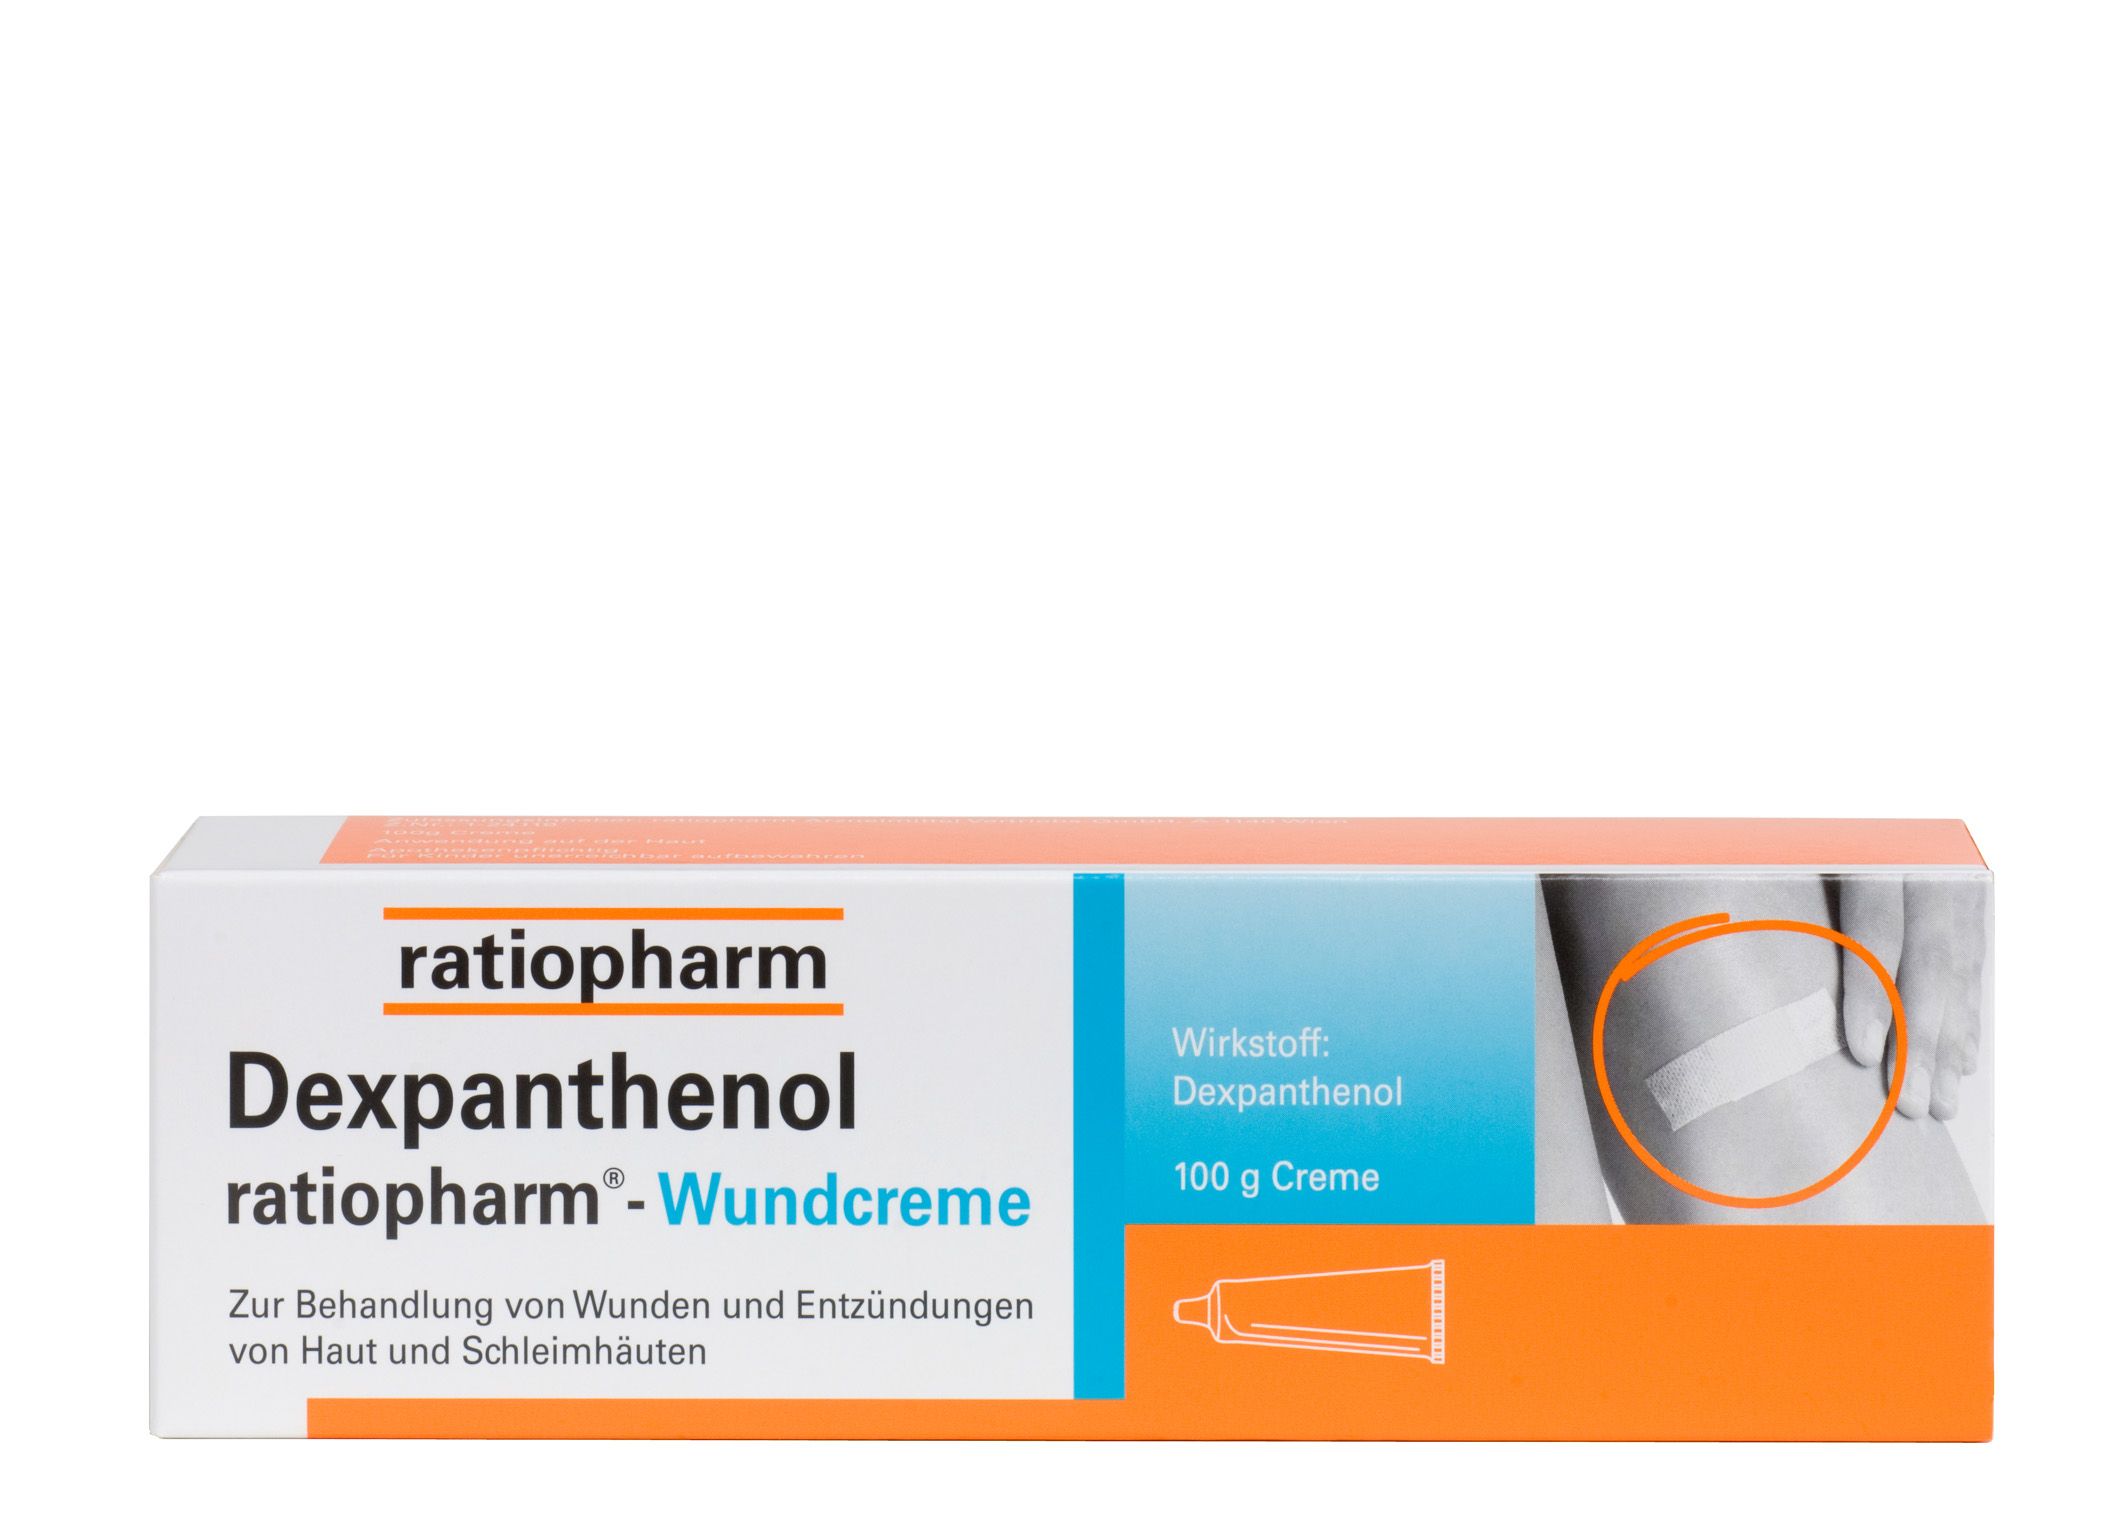 Abbildung Dexpanthenol "ratiopharm" 5% - Wundcreme